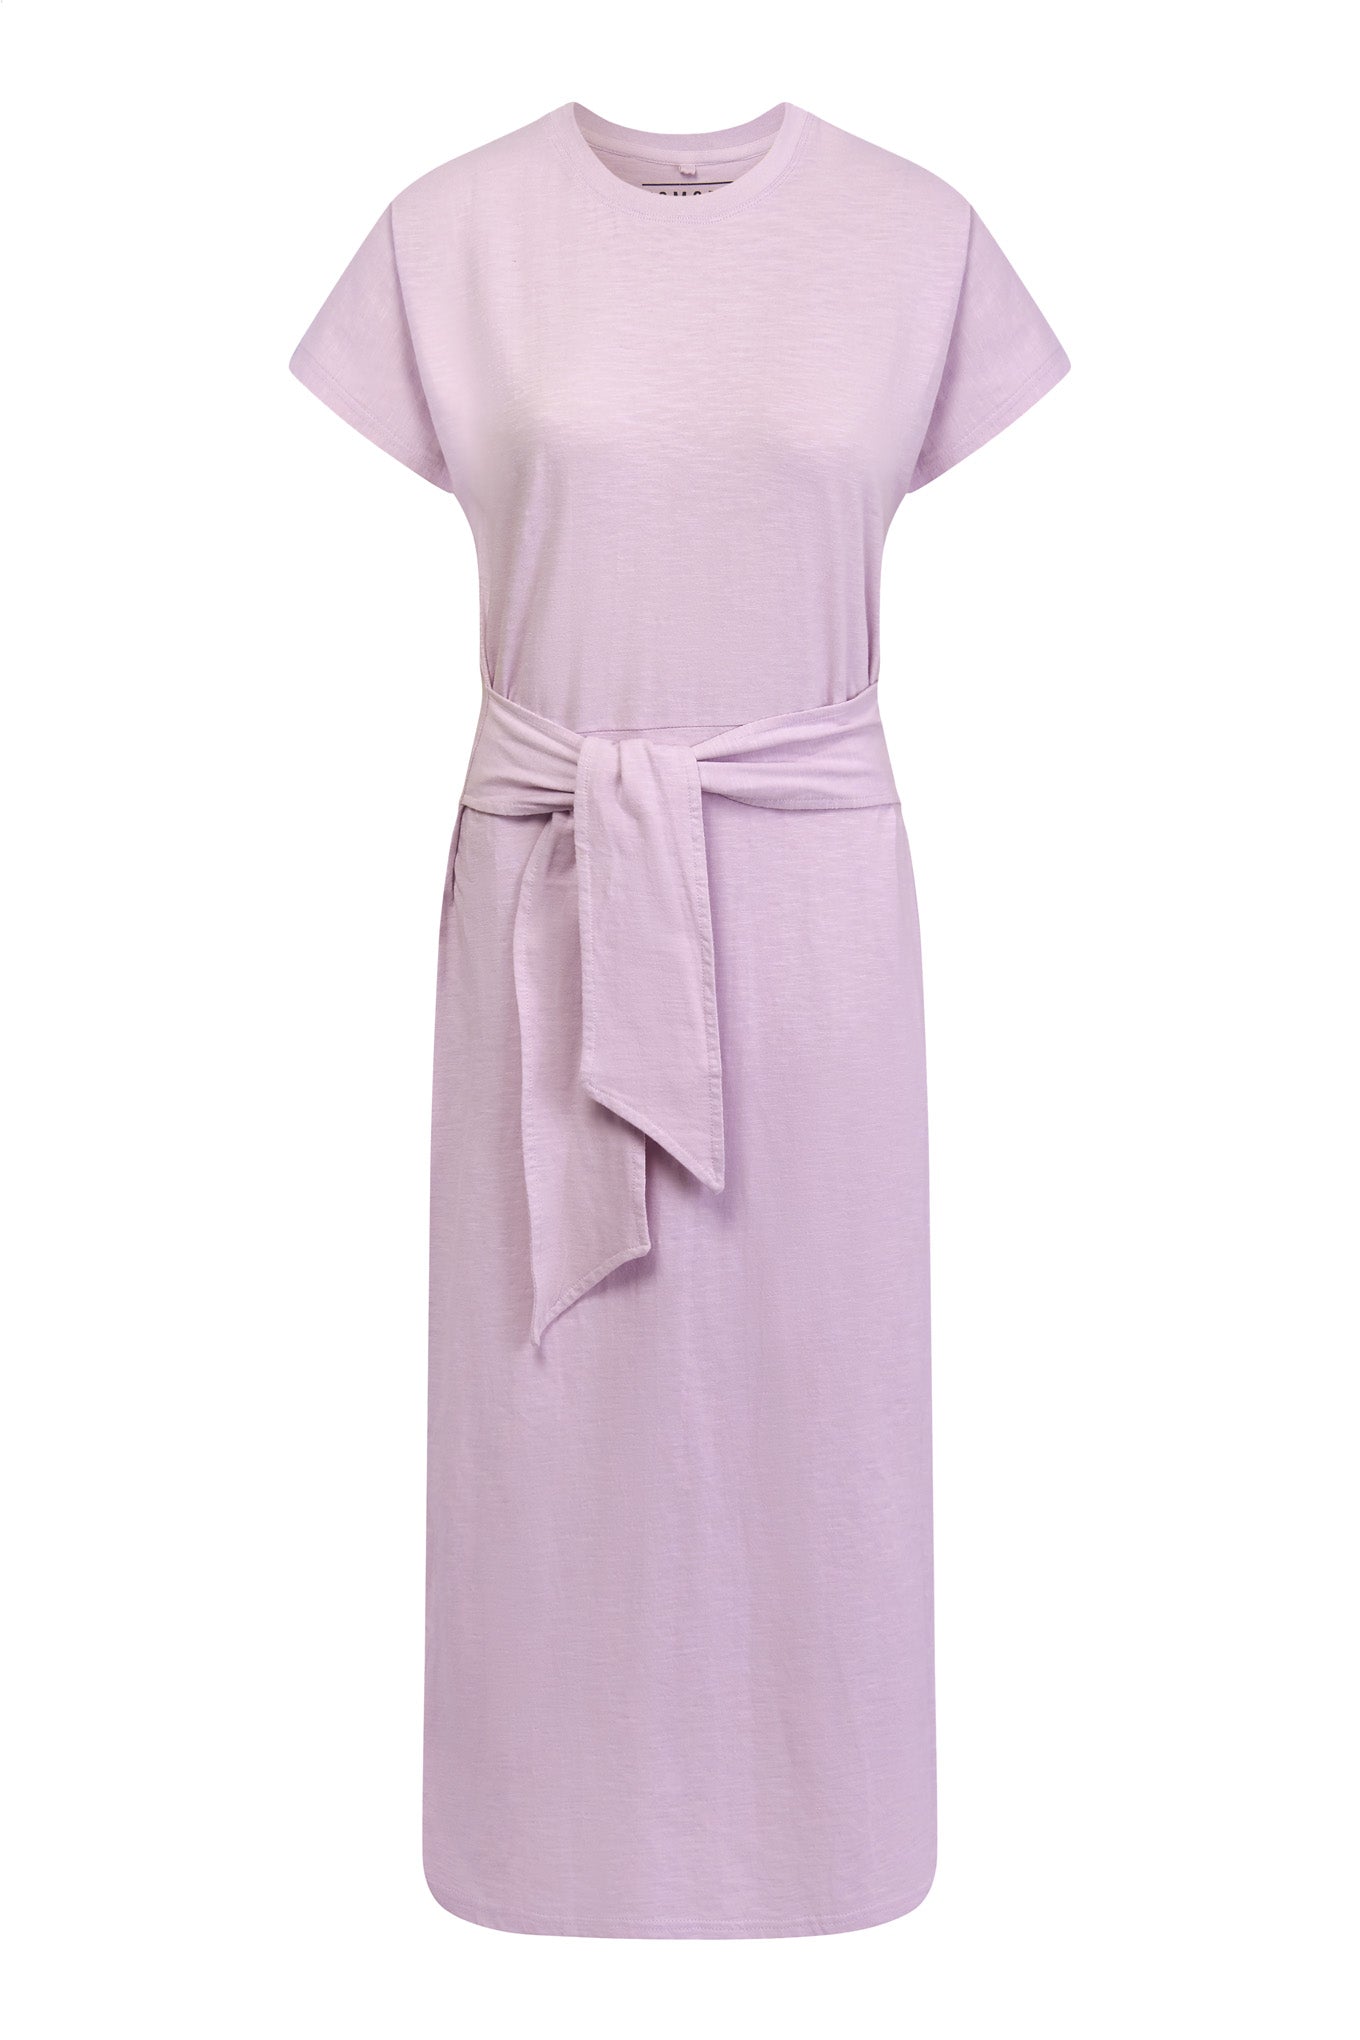 FONDA Organic Cotton Dress - Pink Lavender